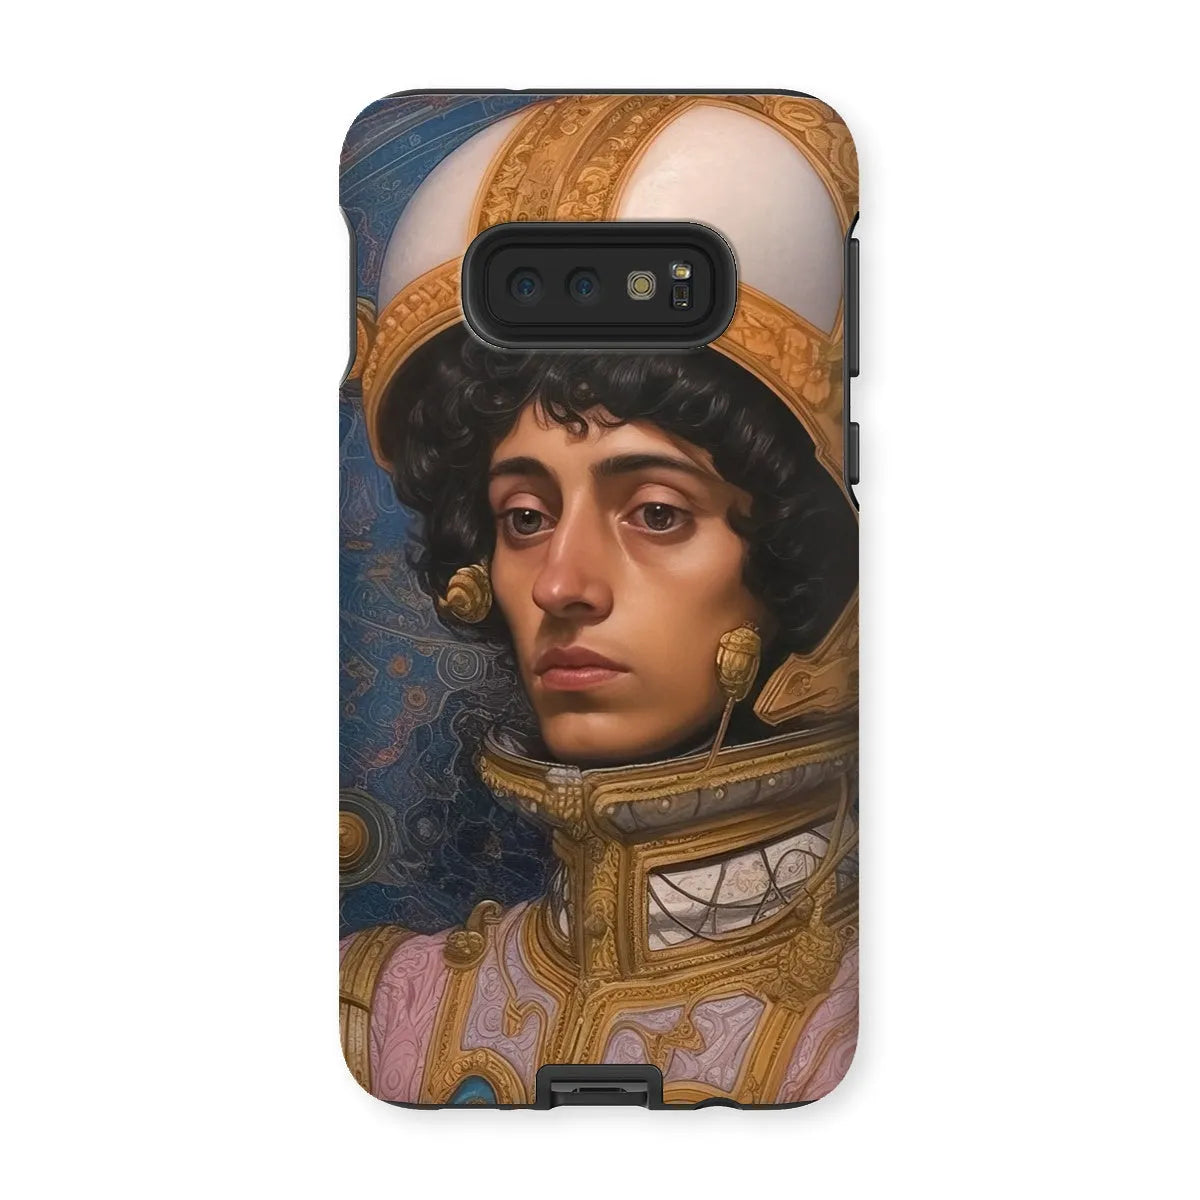 Samir The Gay Astronaut - Lgbtq Art Phone Case - Samsung Galaxy S10e / Matte - Mobile Phone Cases - Aesthetic Art